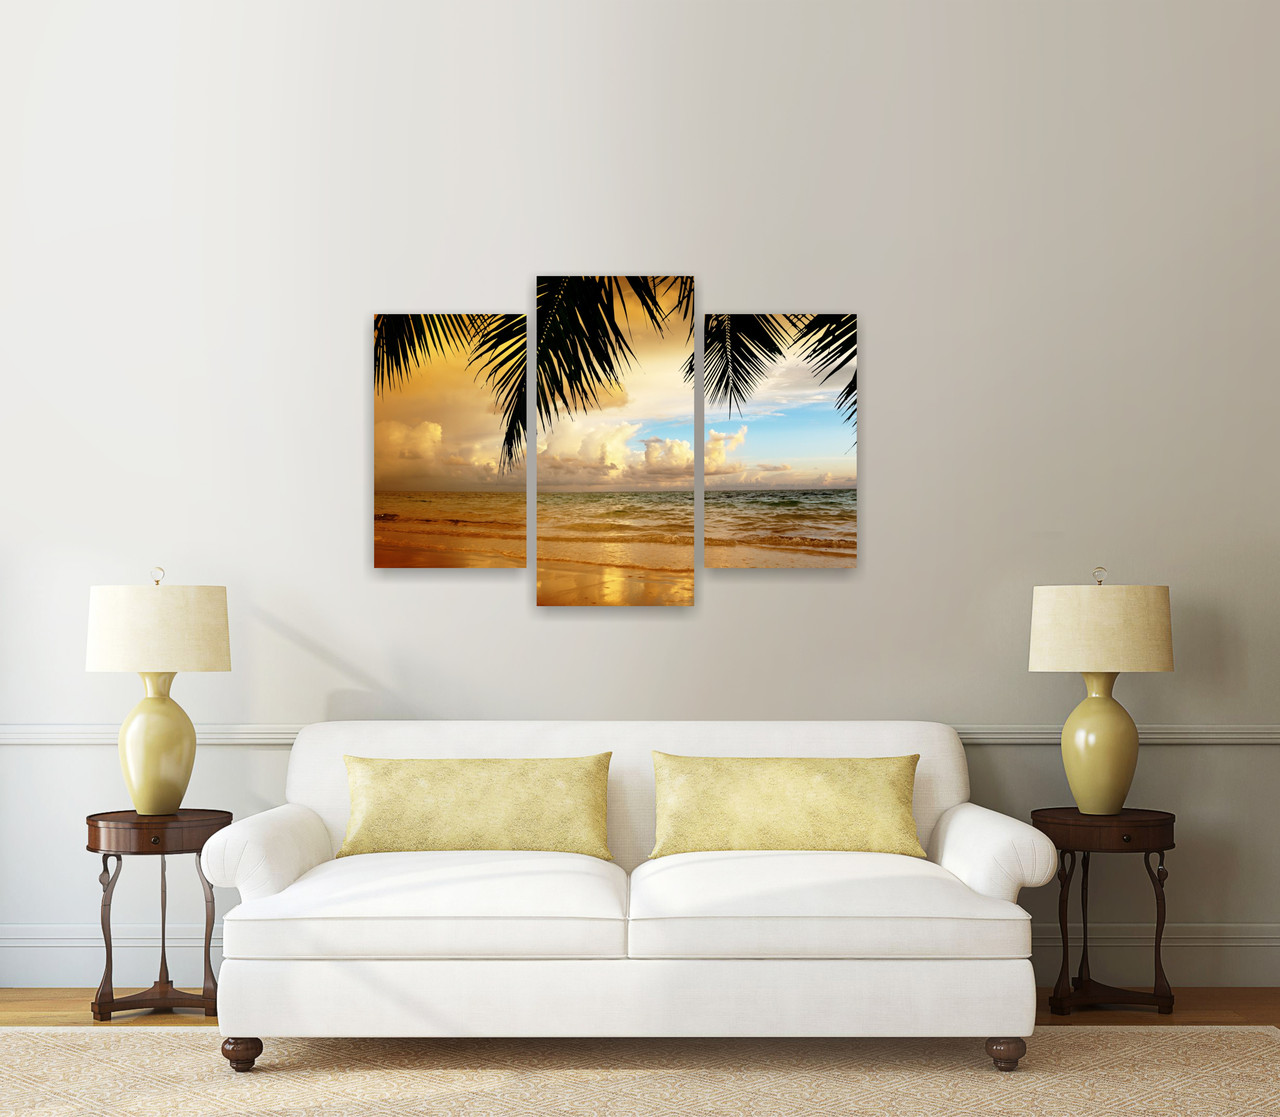 Модульная картина (910х650 мм) "Пляж на закате дня"